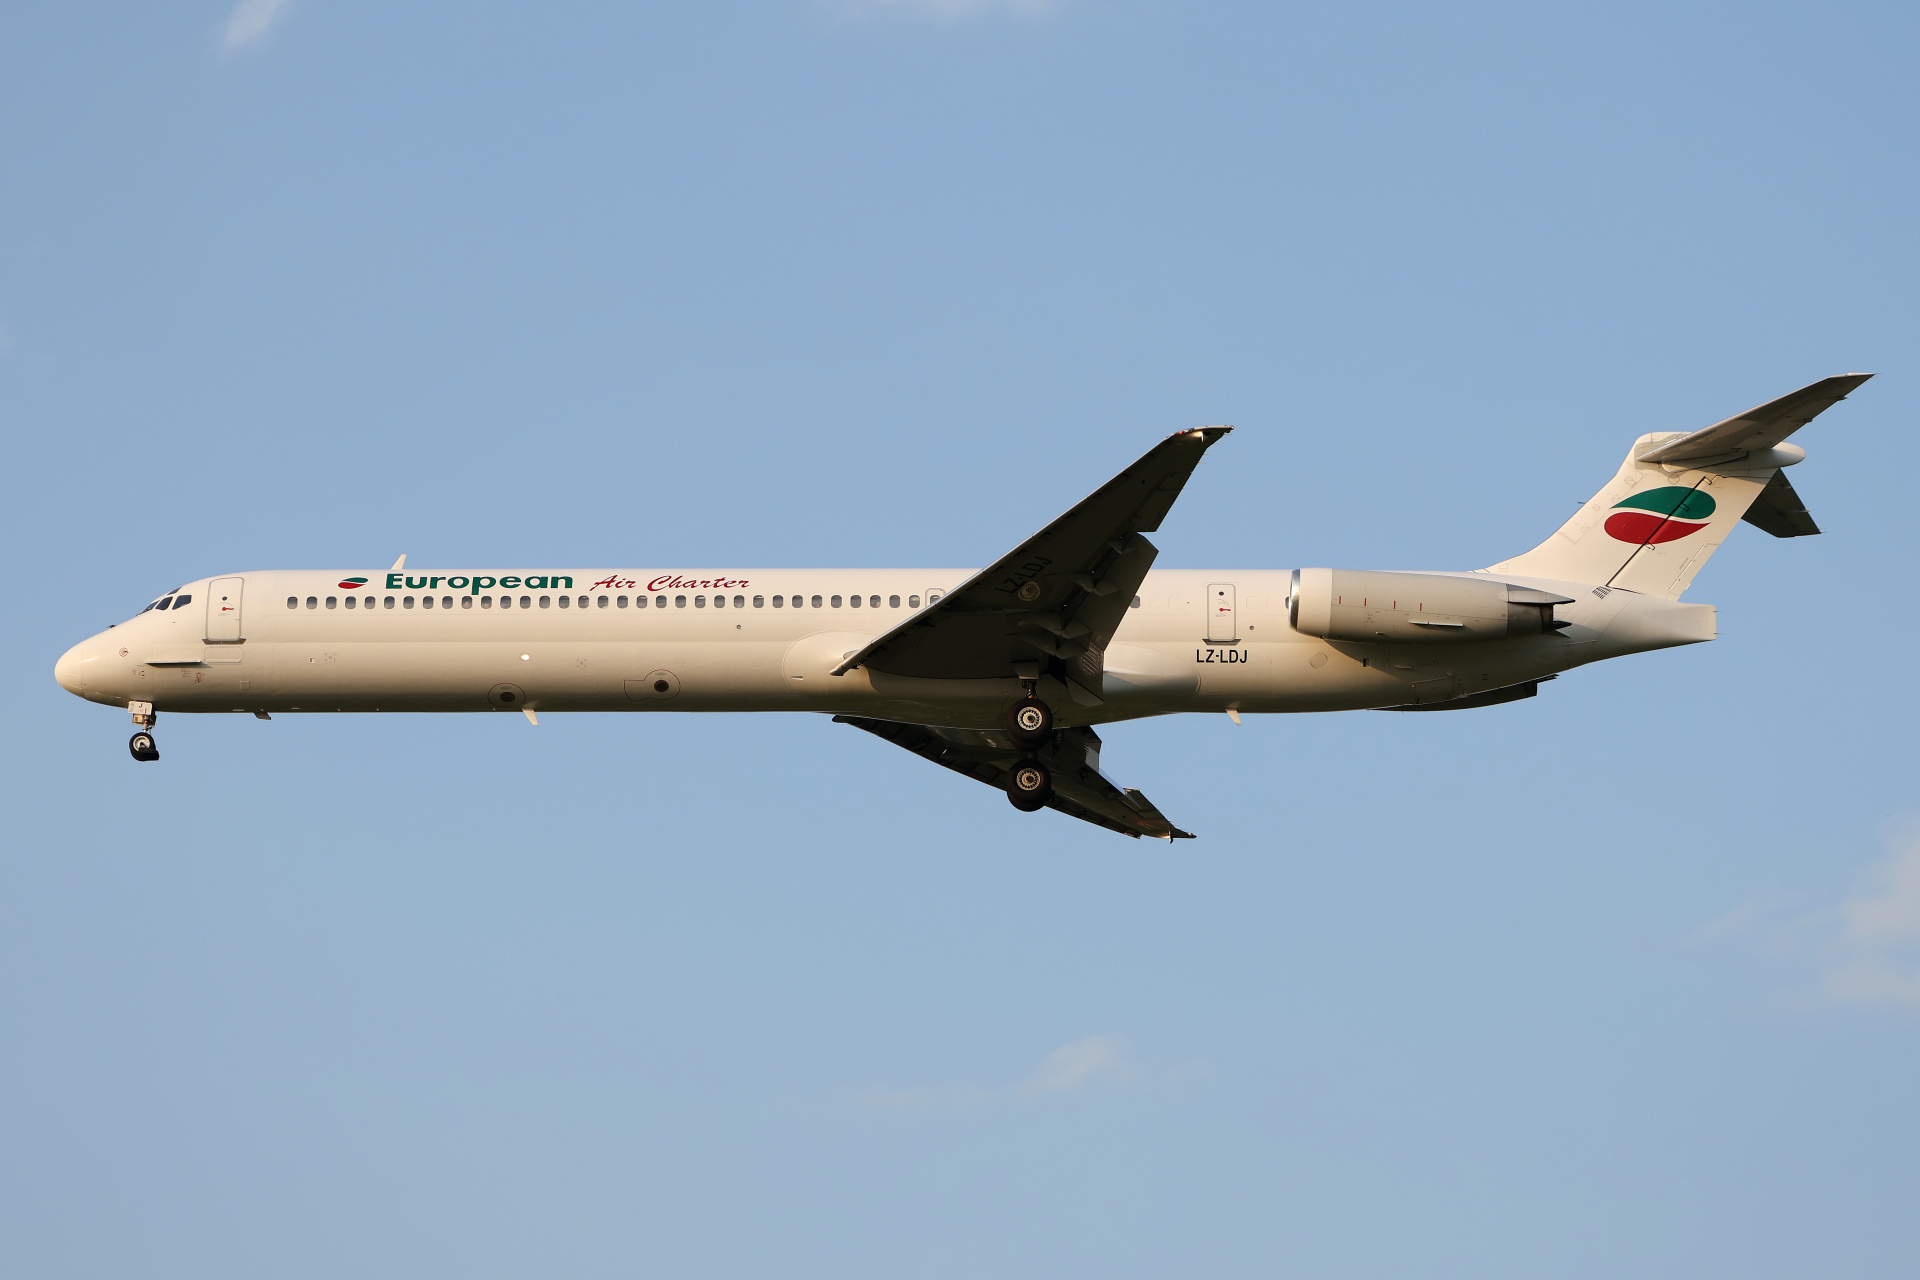 LZ-LDJ, European Air Charter (Aircraft » EPWA Spotting » McDonnell Douglas MD-82)